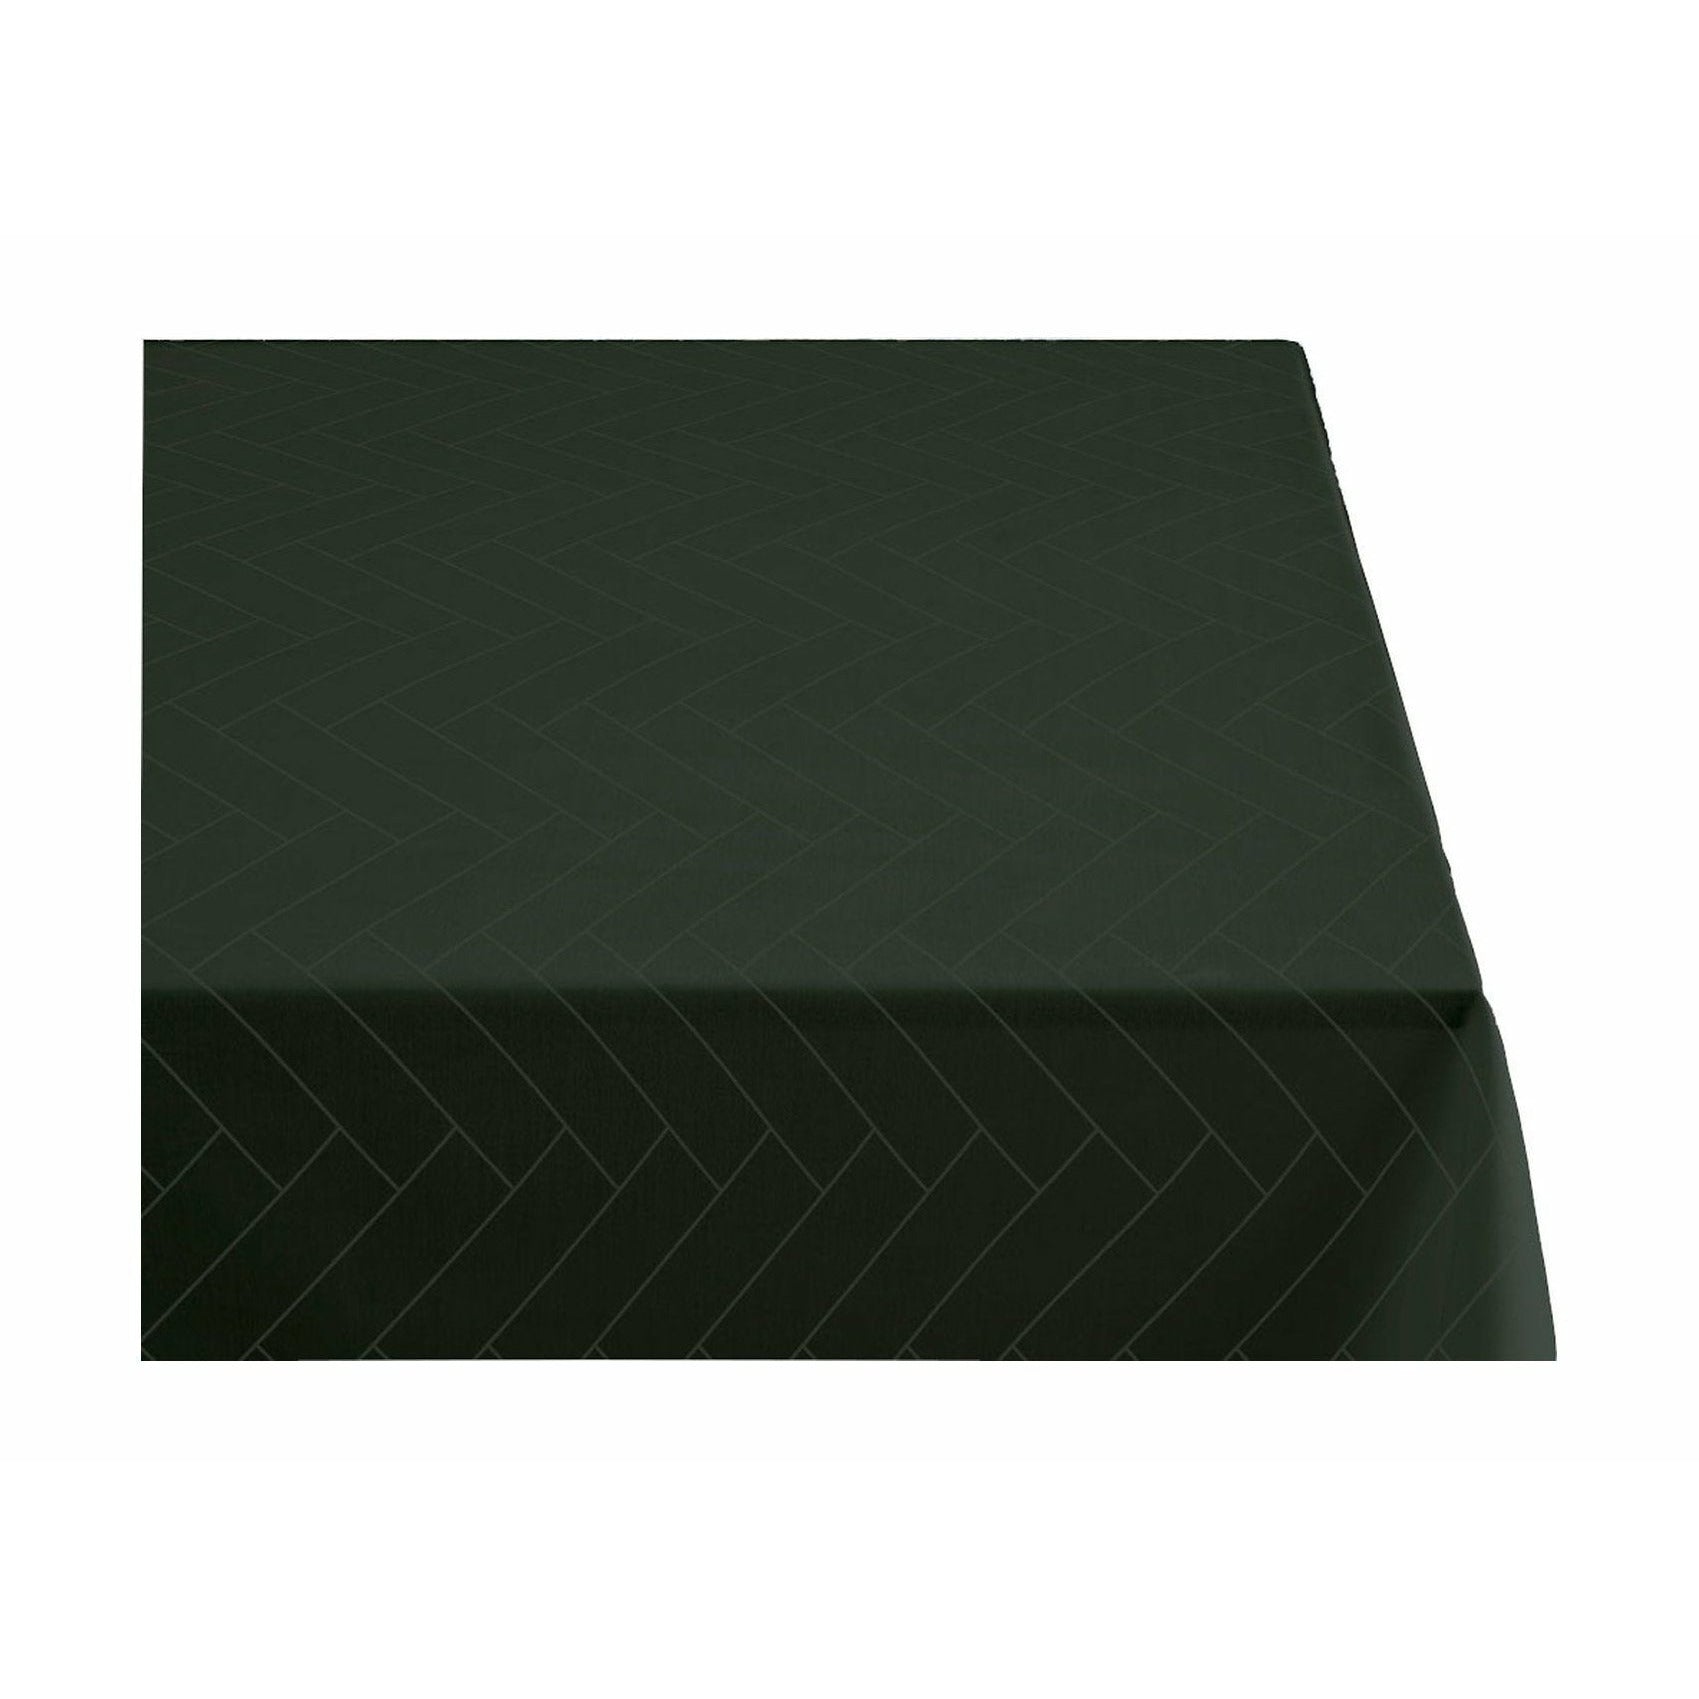 Södahl Dagg 140x270 brickor damask bordduk, skoggrön